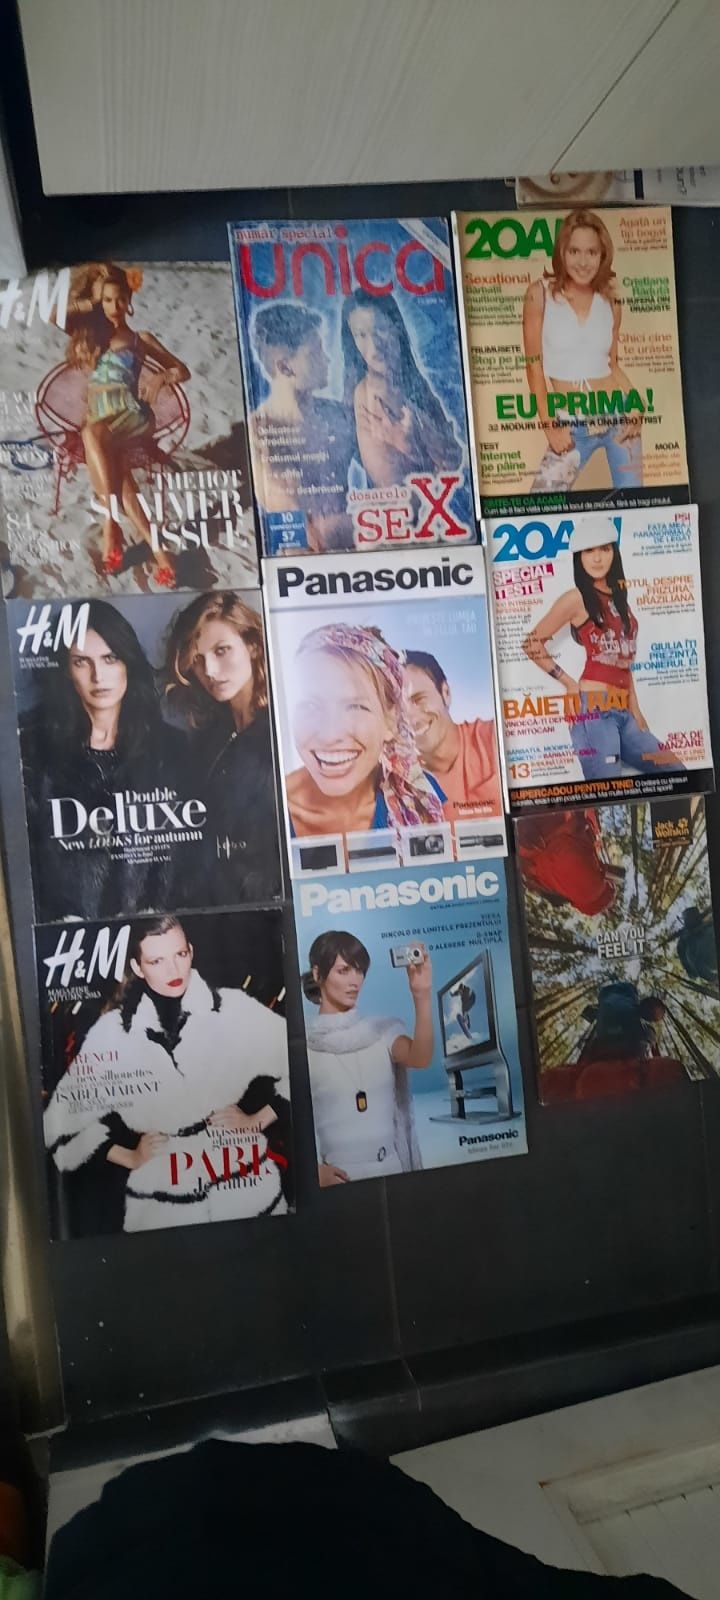 Panasonic/sex reviste